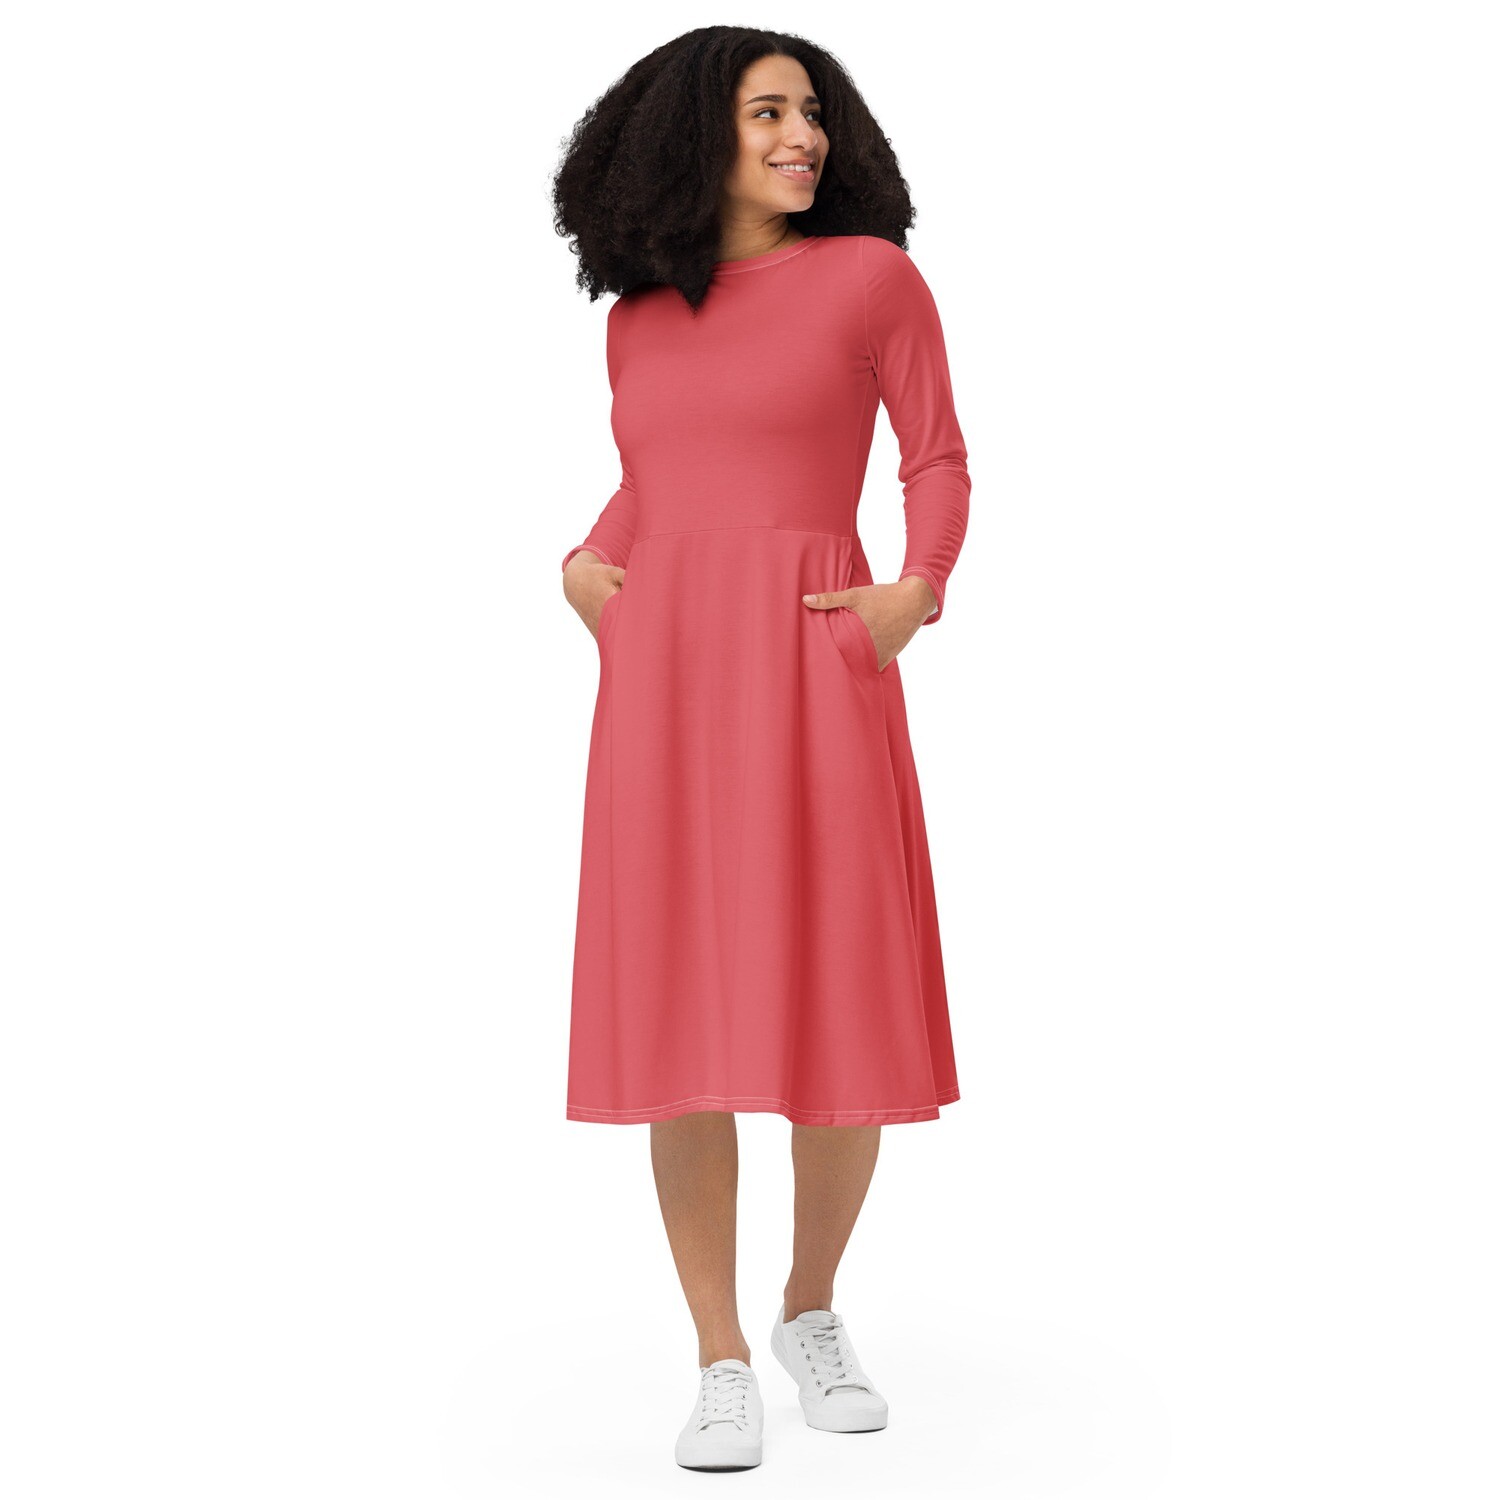 Retro red long sleeve midi dress with pockets - spring dress